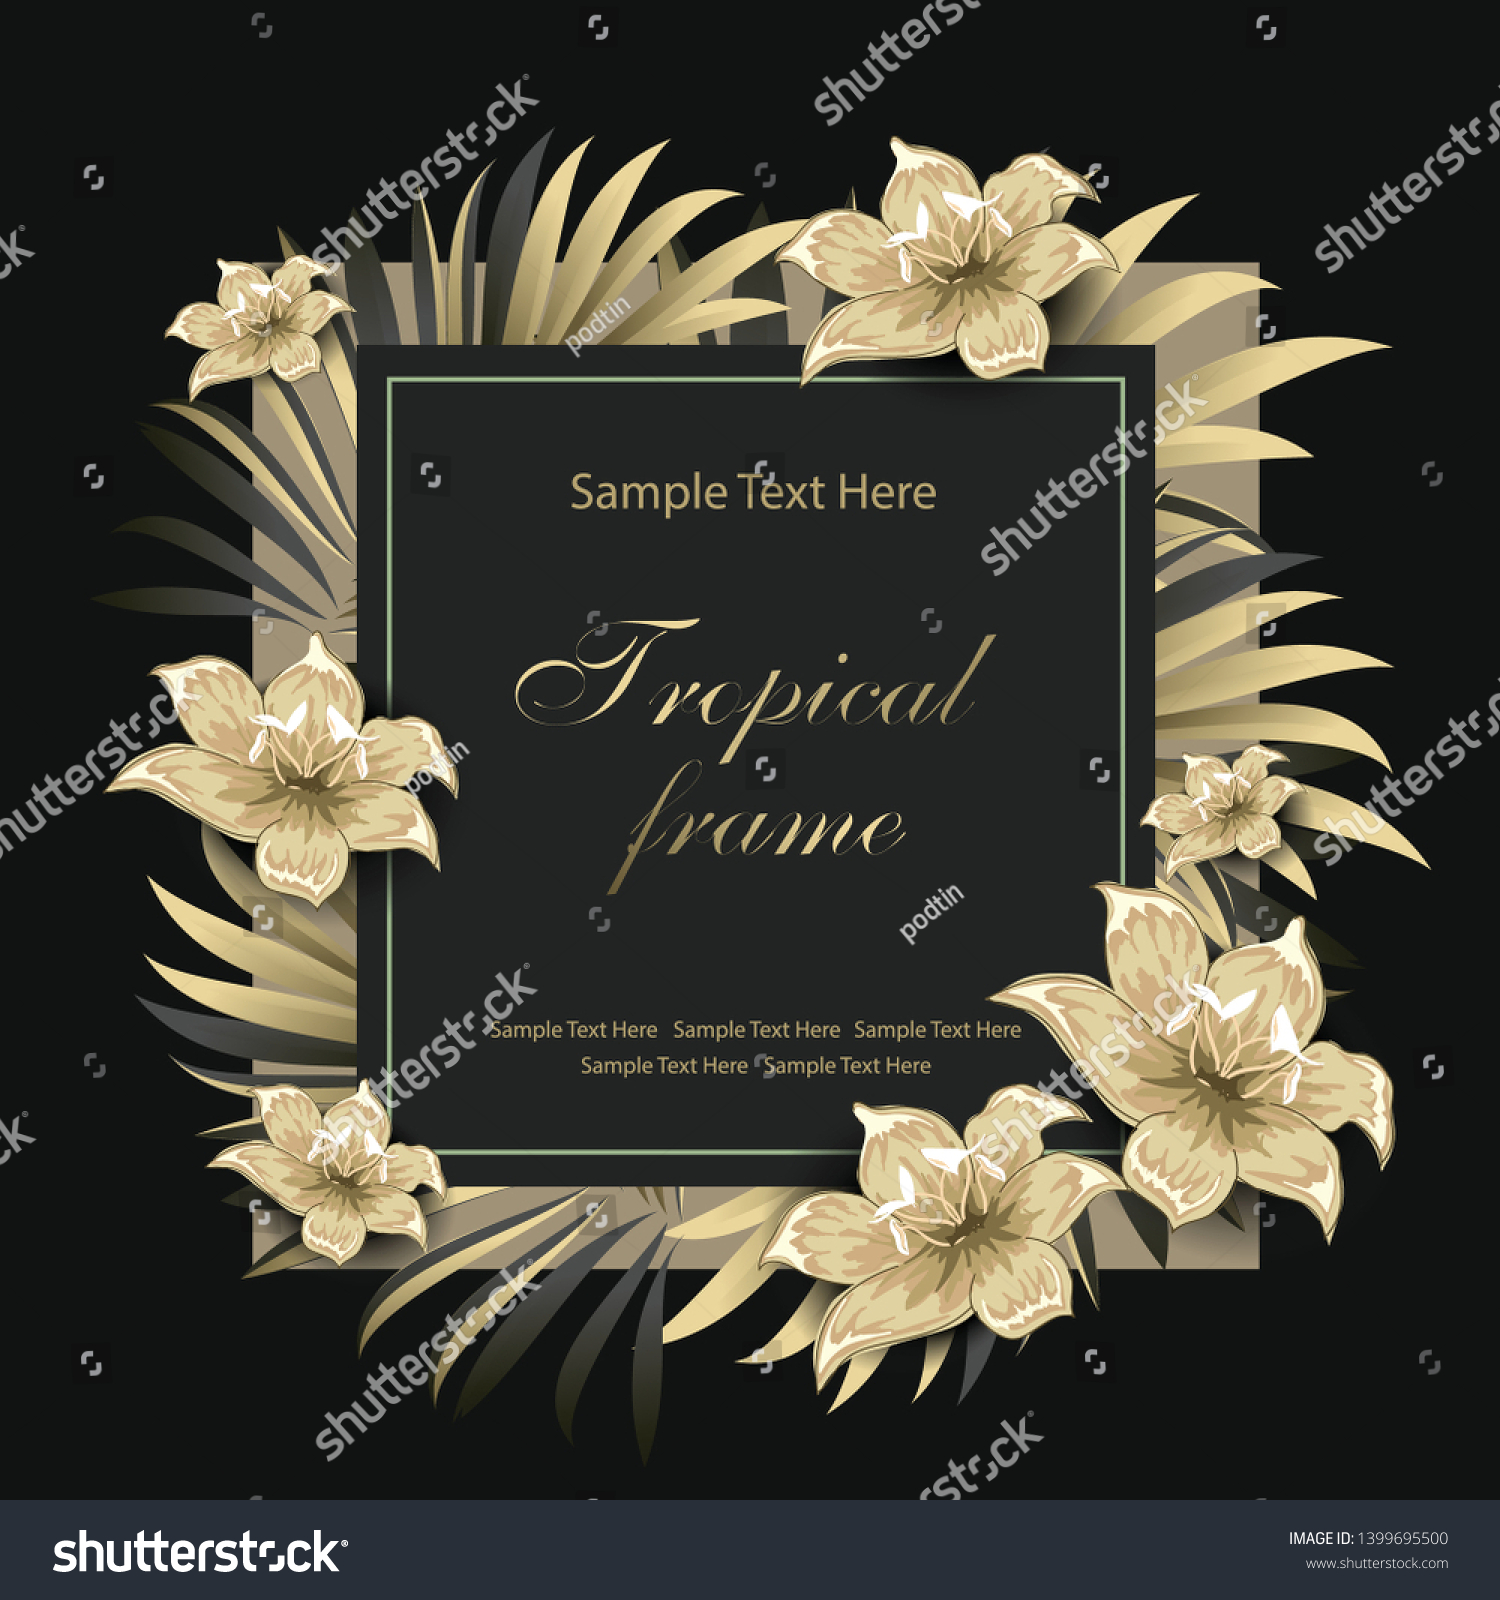 Download Premium Vector Of Blank Floral Frame Card Illustration 471690 Card Illustration Frame Card Floral